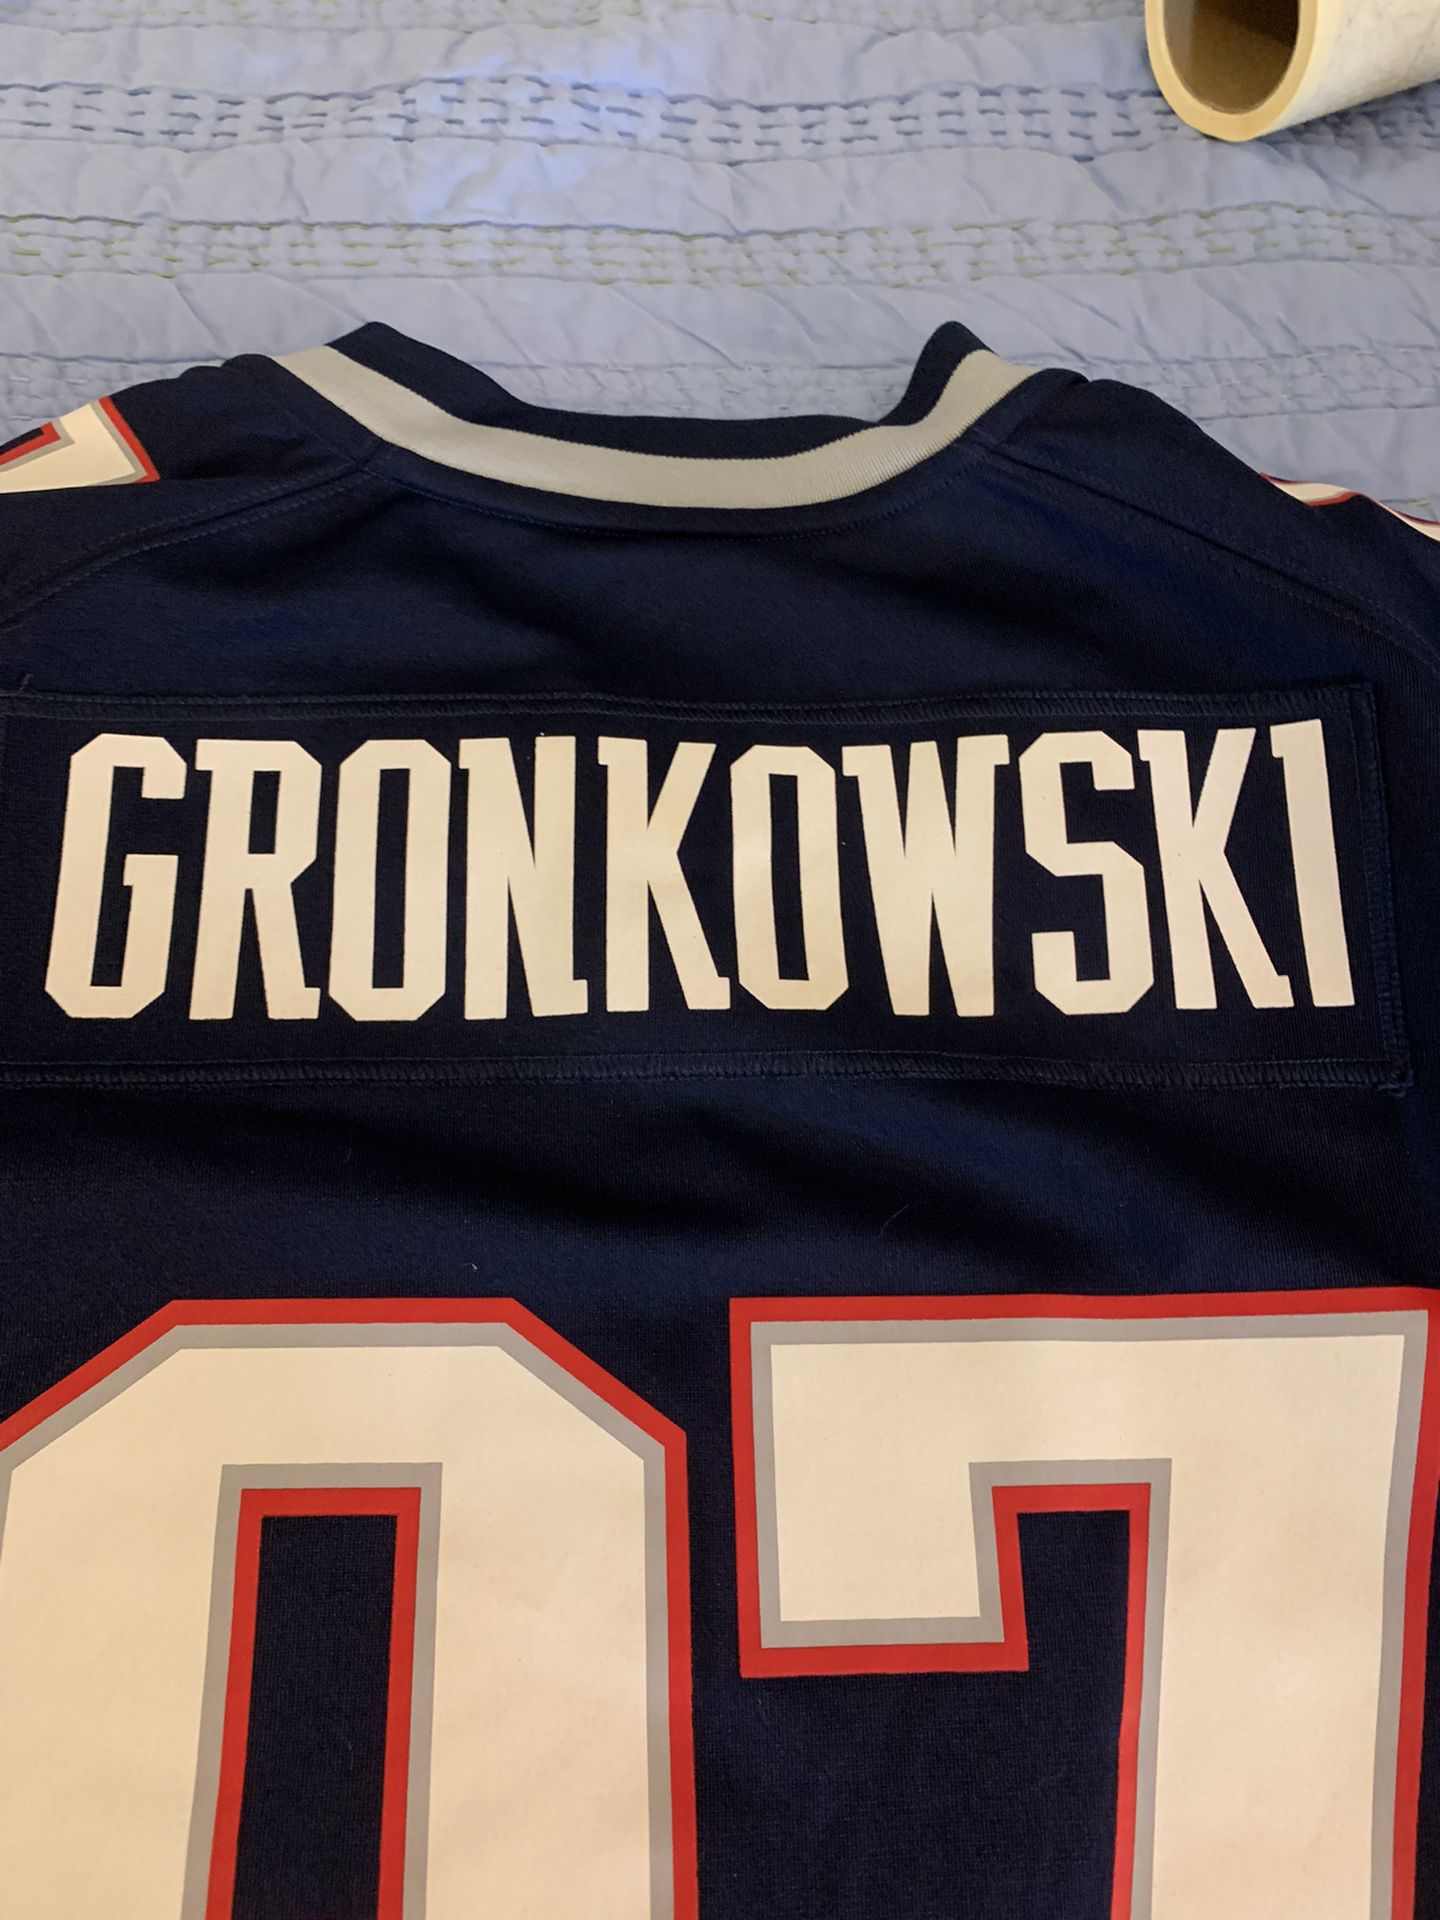 NFL Jersey Size medium Patriot Gronkowski